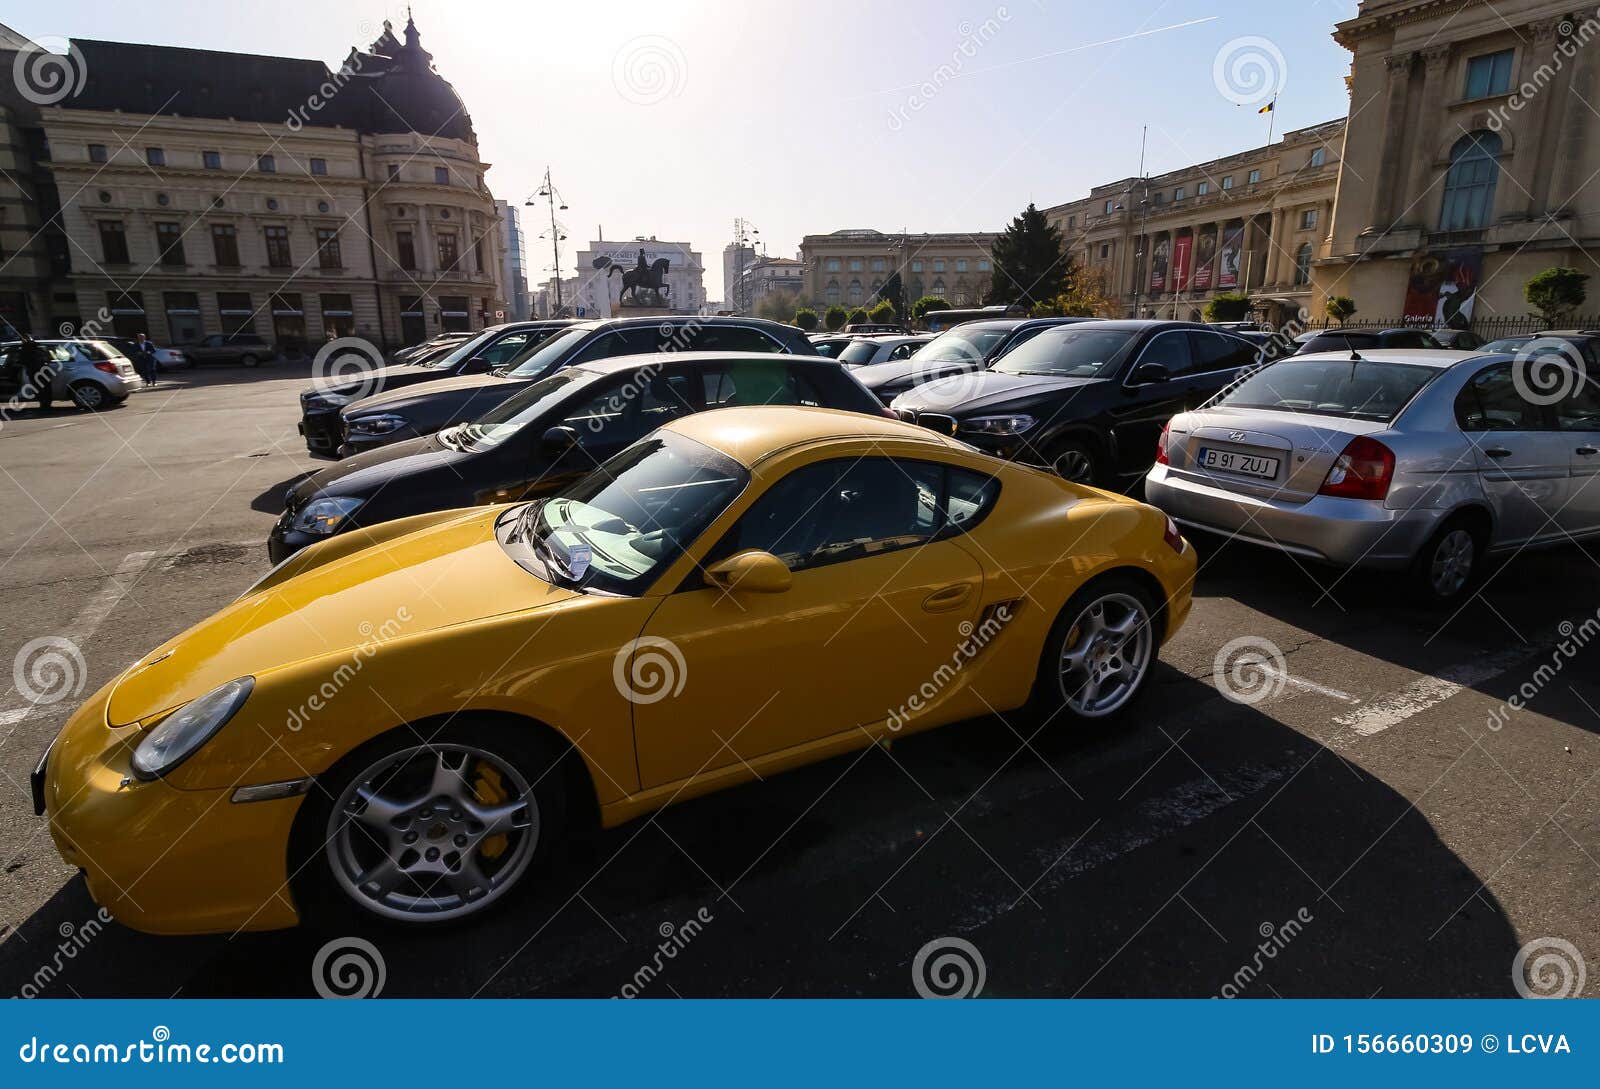 https://thumbs.dreamstime.com/z/yellow-porsche-cayman-s-bucharest-romania-october-car-seen-parking-lot-downtown-image-editorial-use-156660309.jpg